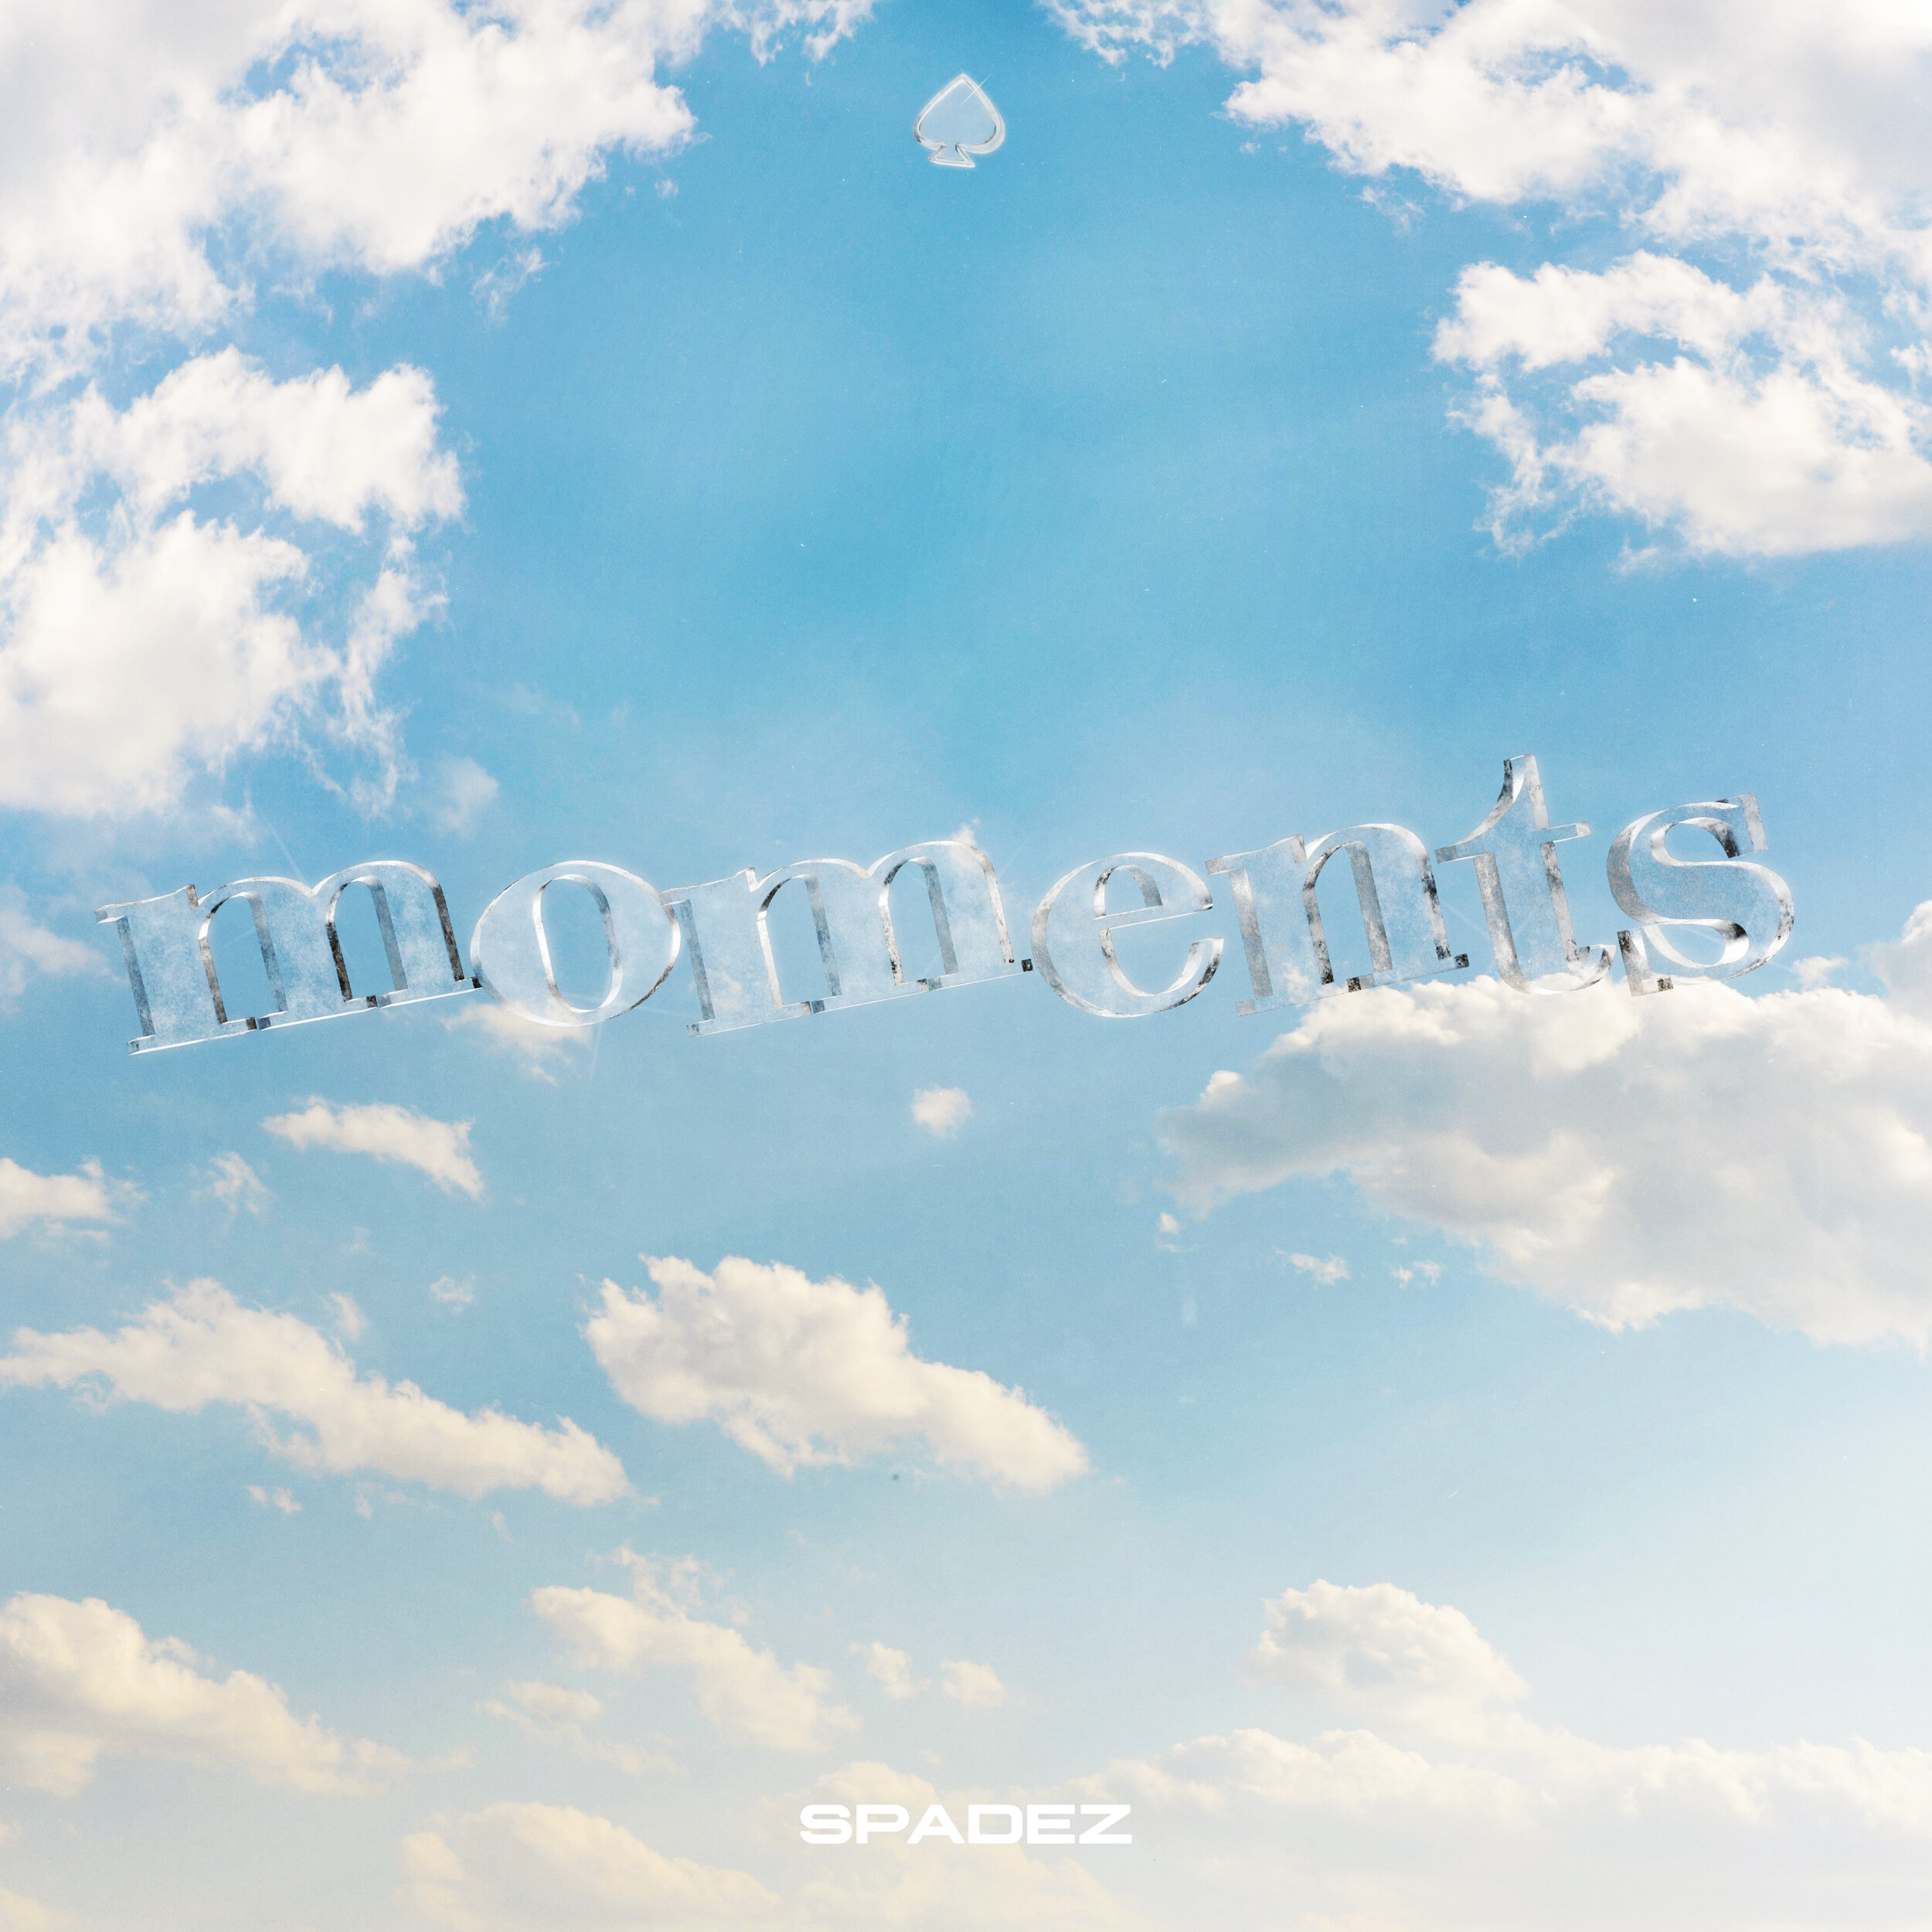 Spadez - moments - Album Cover Design